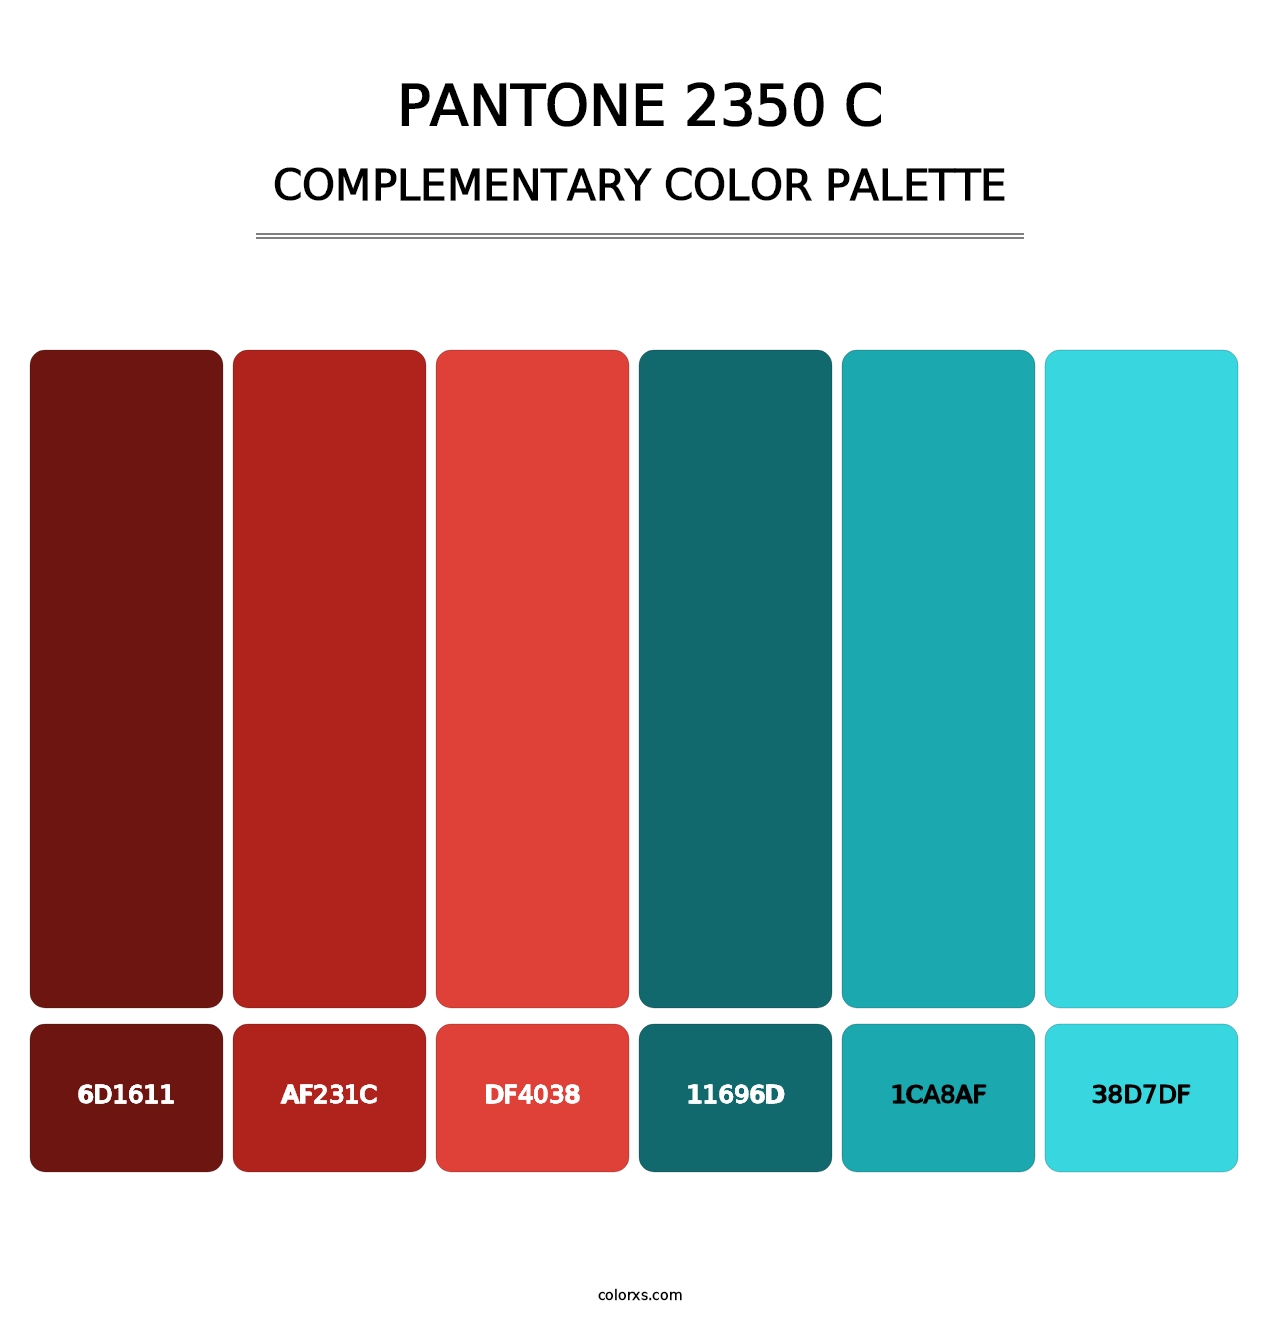 PANTONE 2350 C - Complementary Color Palette